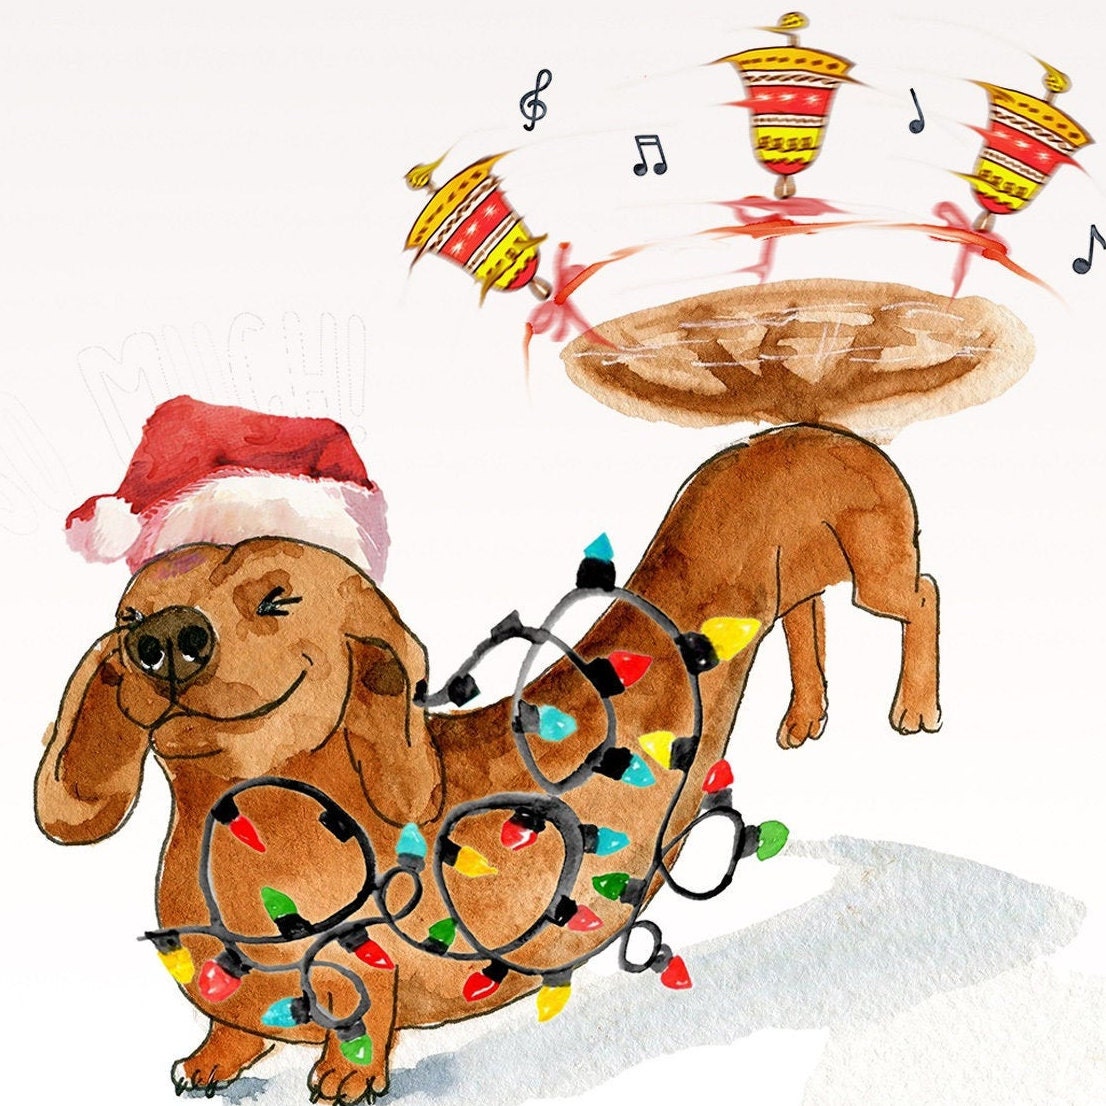 Dachshun Christmas Card Funny - Wiener Dog Jingle All The Way